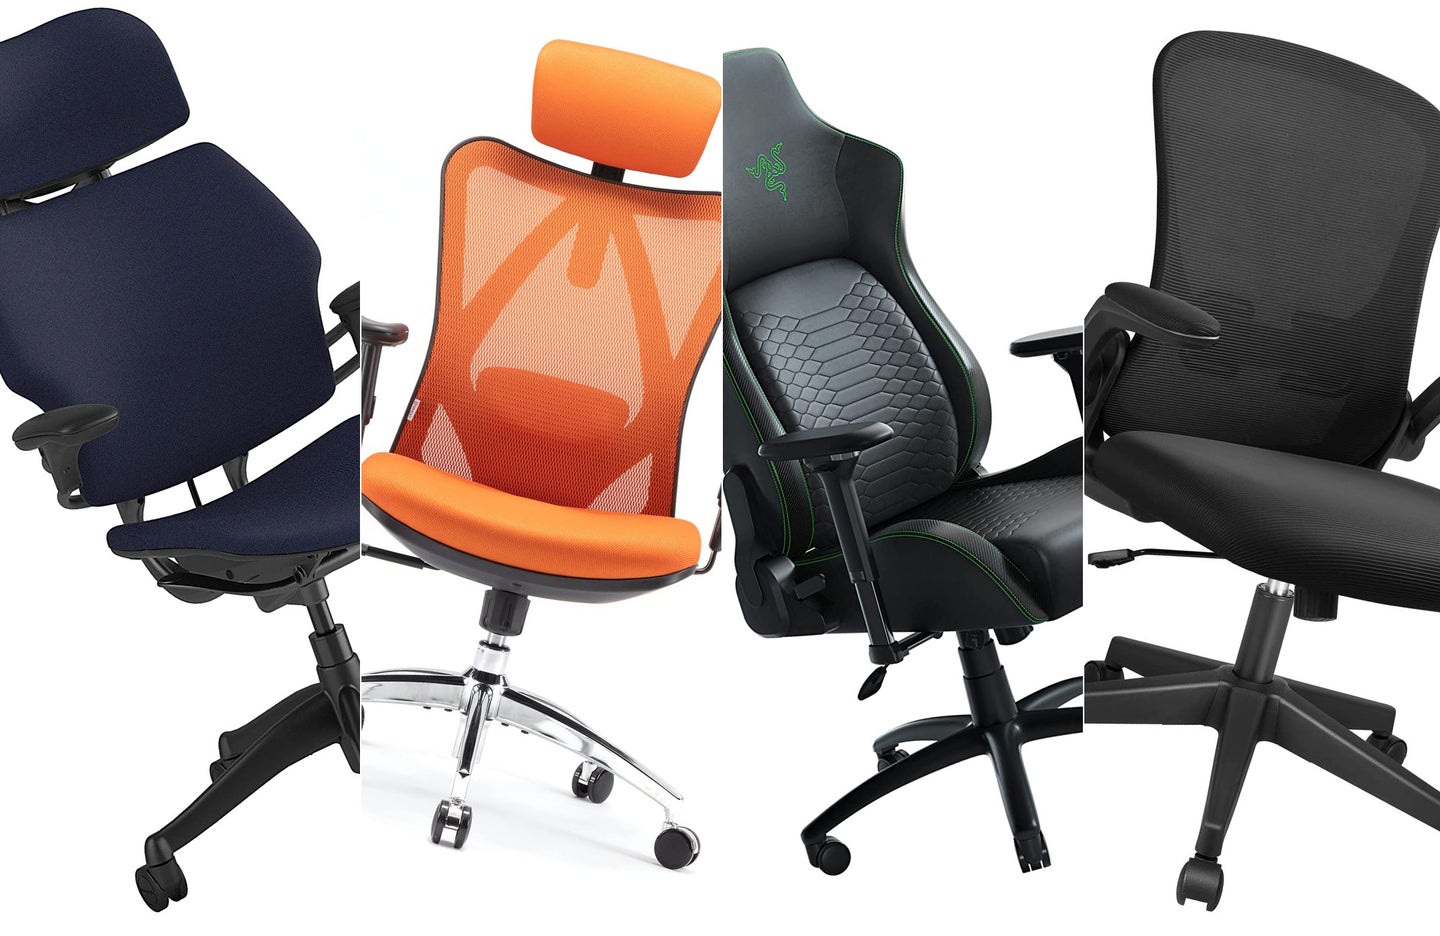 https://www.popsci.com/uploads/2023/03/16/best-office-chairs-for-lumbar-support.jpg?auto=webp&width=1440&height=936